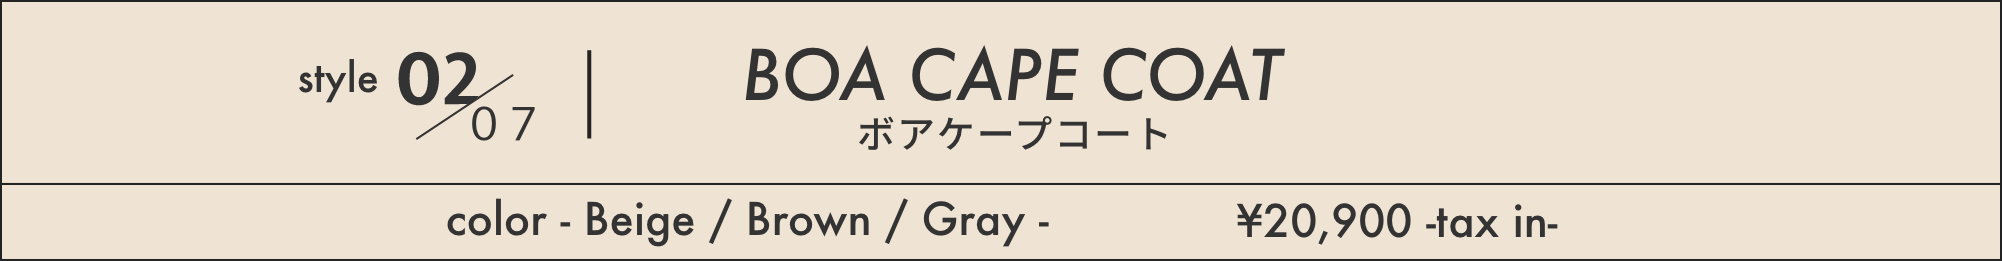 style02/07 BOA CAPE COAT ボアケープコート color - Beige / Brown / Gray - ¥20,900 -tax in-